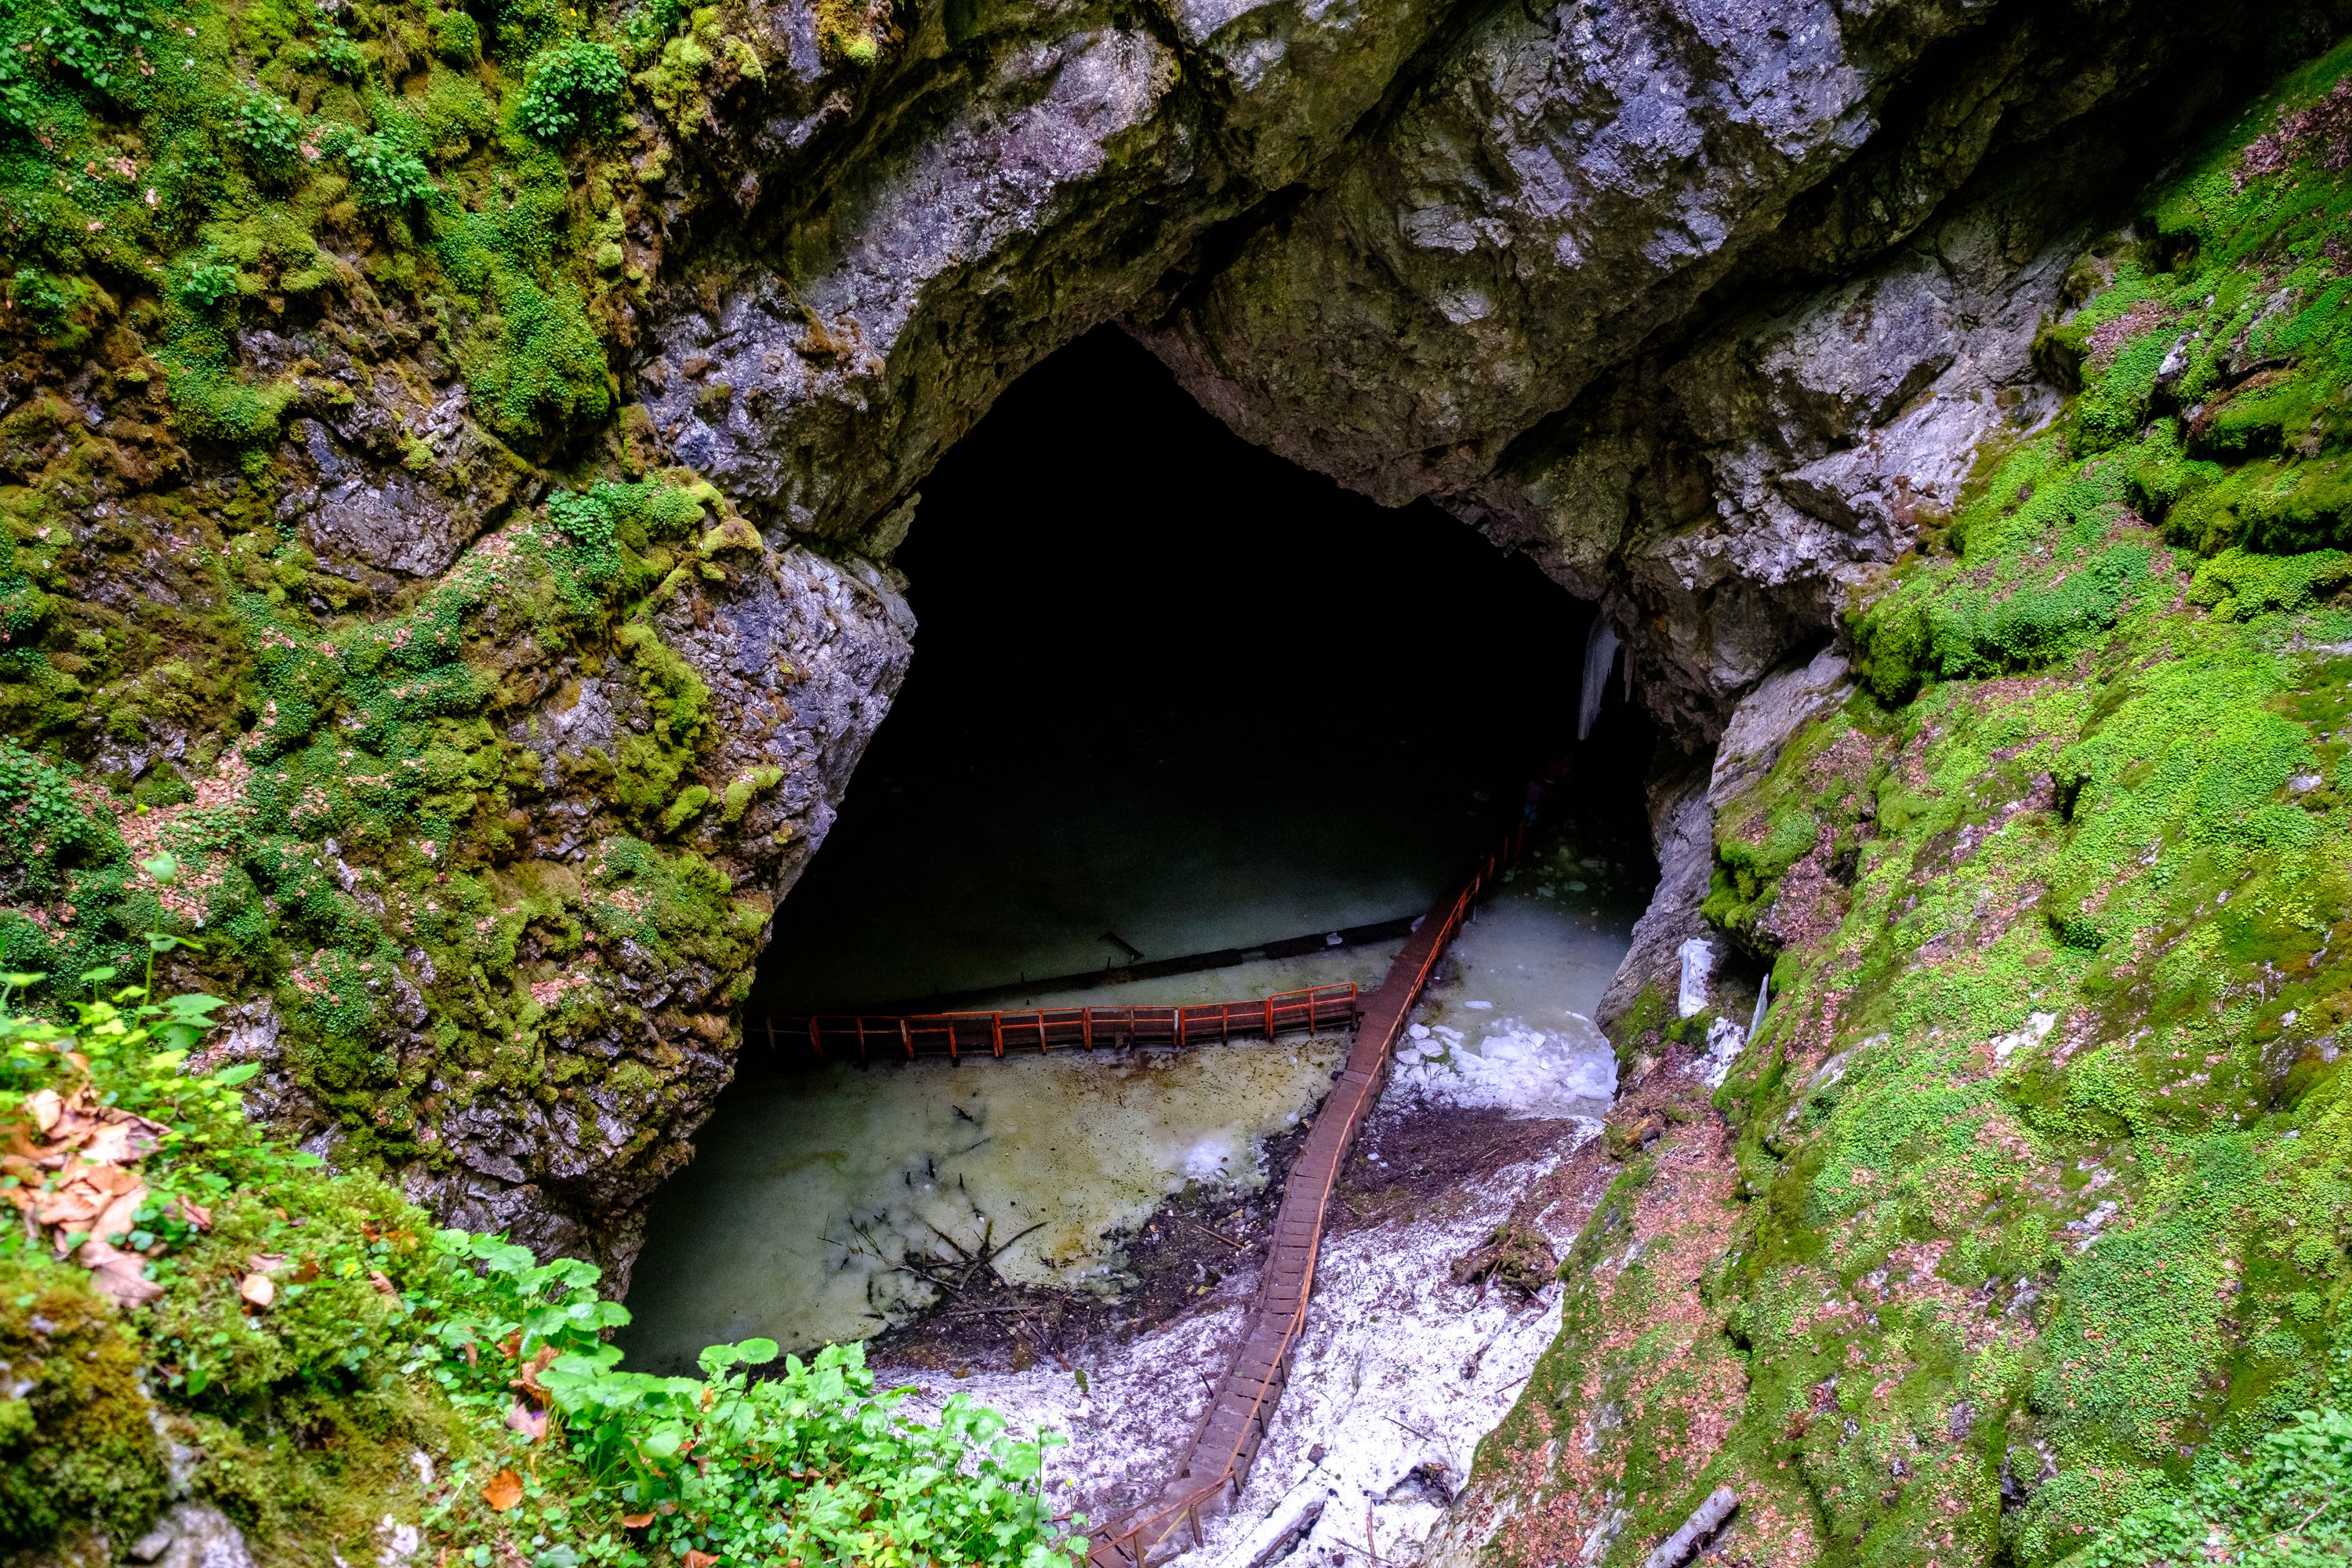 The frozen mouth of Scărișoara cave looms below. Fujifilm X-Pro 2 + 14mm: 1/60 @ ƒ/4 ISO 2500